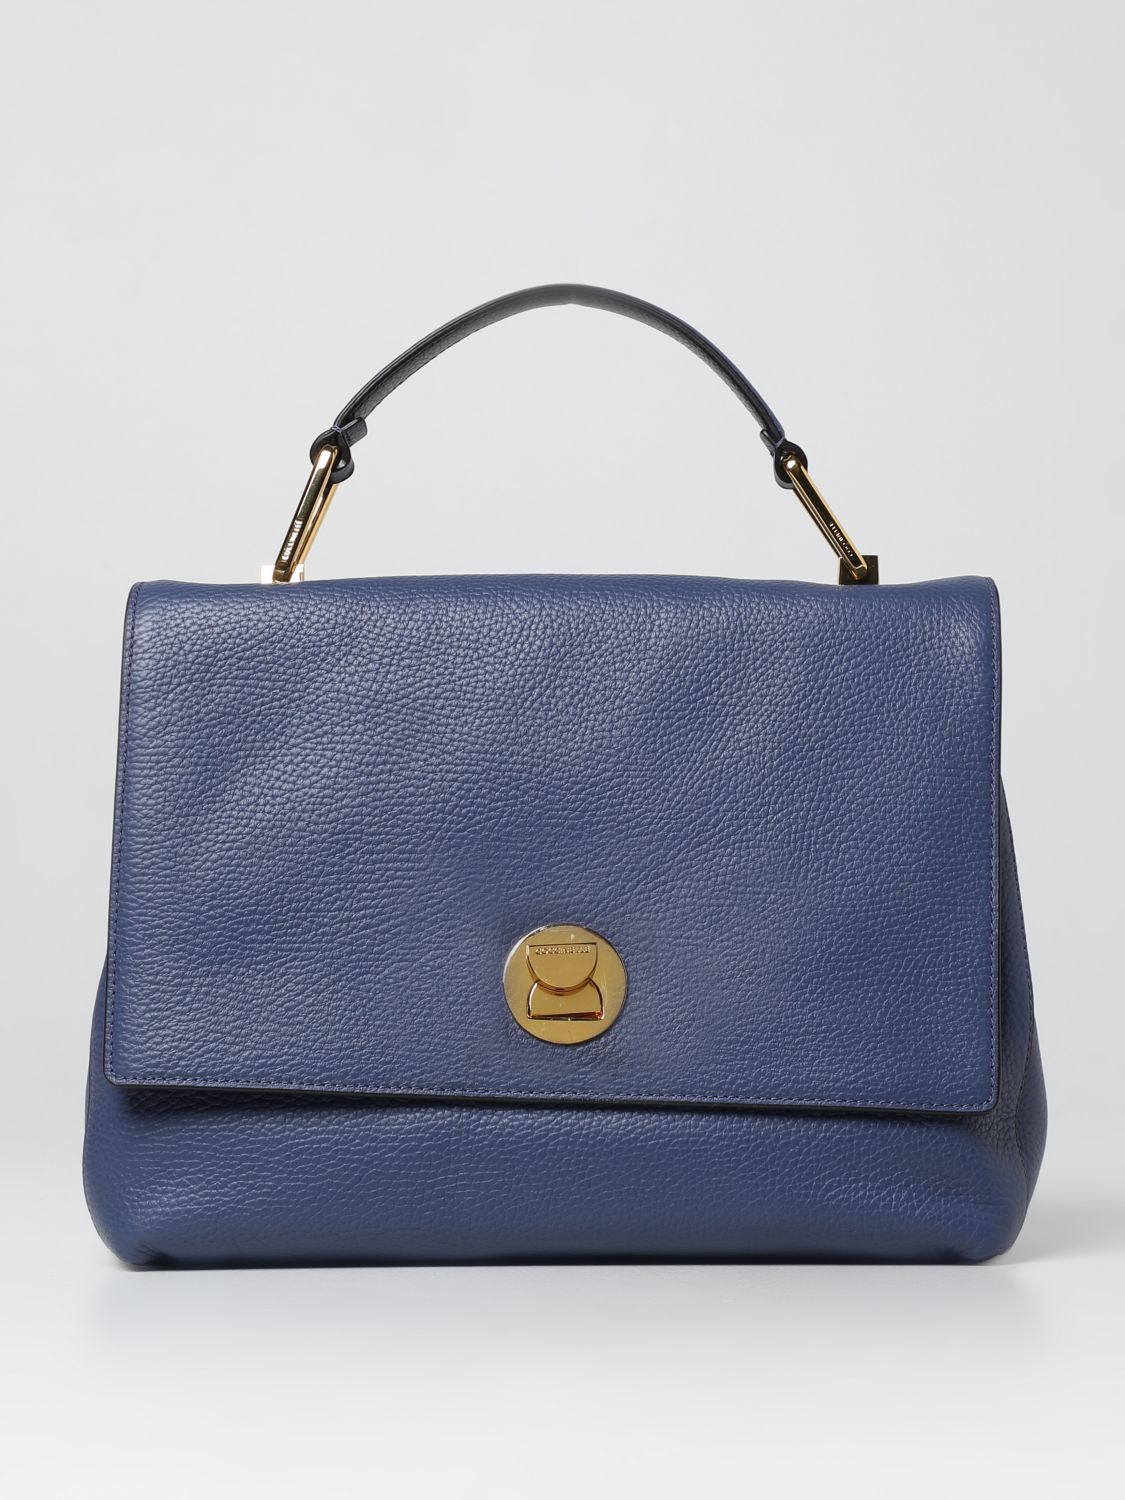 COCCINELLE: handbag for woman - Blueberry | Coccinelle handbag ...